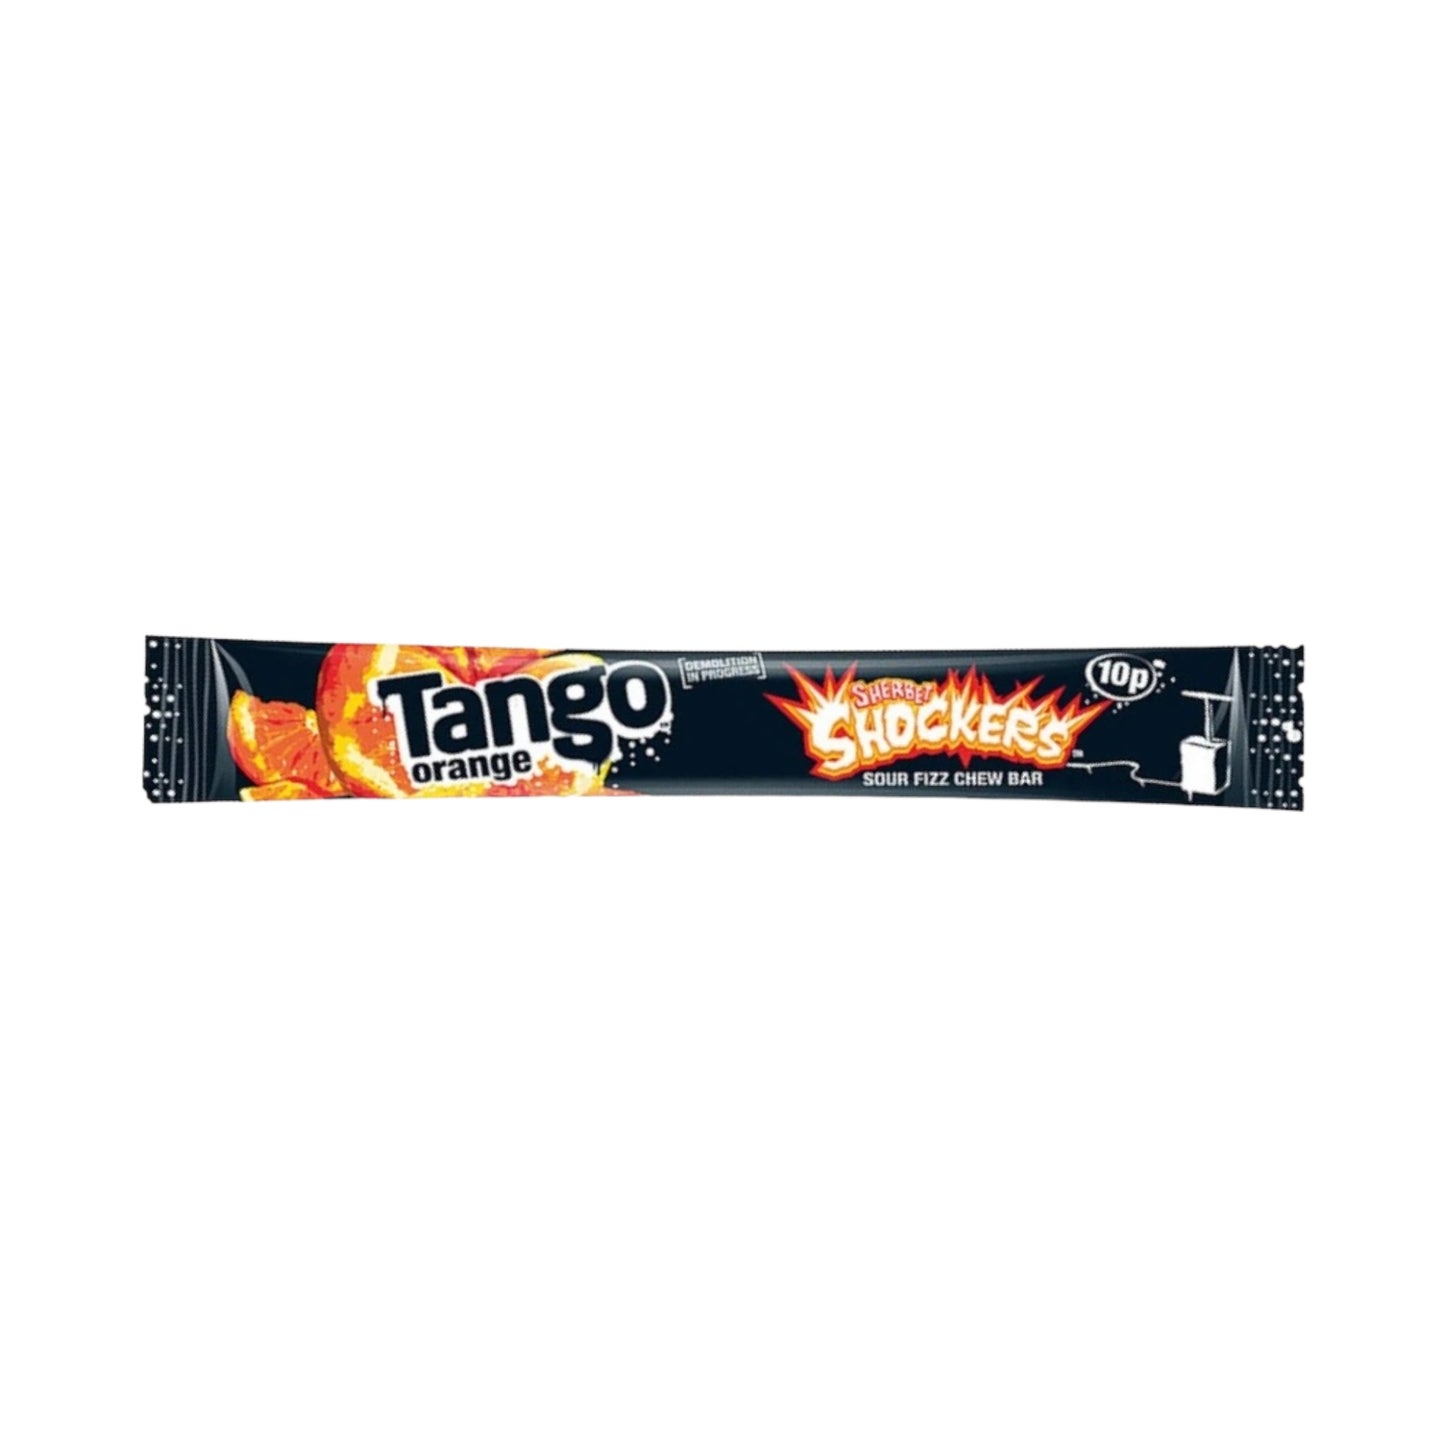 Tango Orange Shockers Sour Fizz Chew Bar - 10g